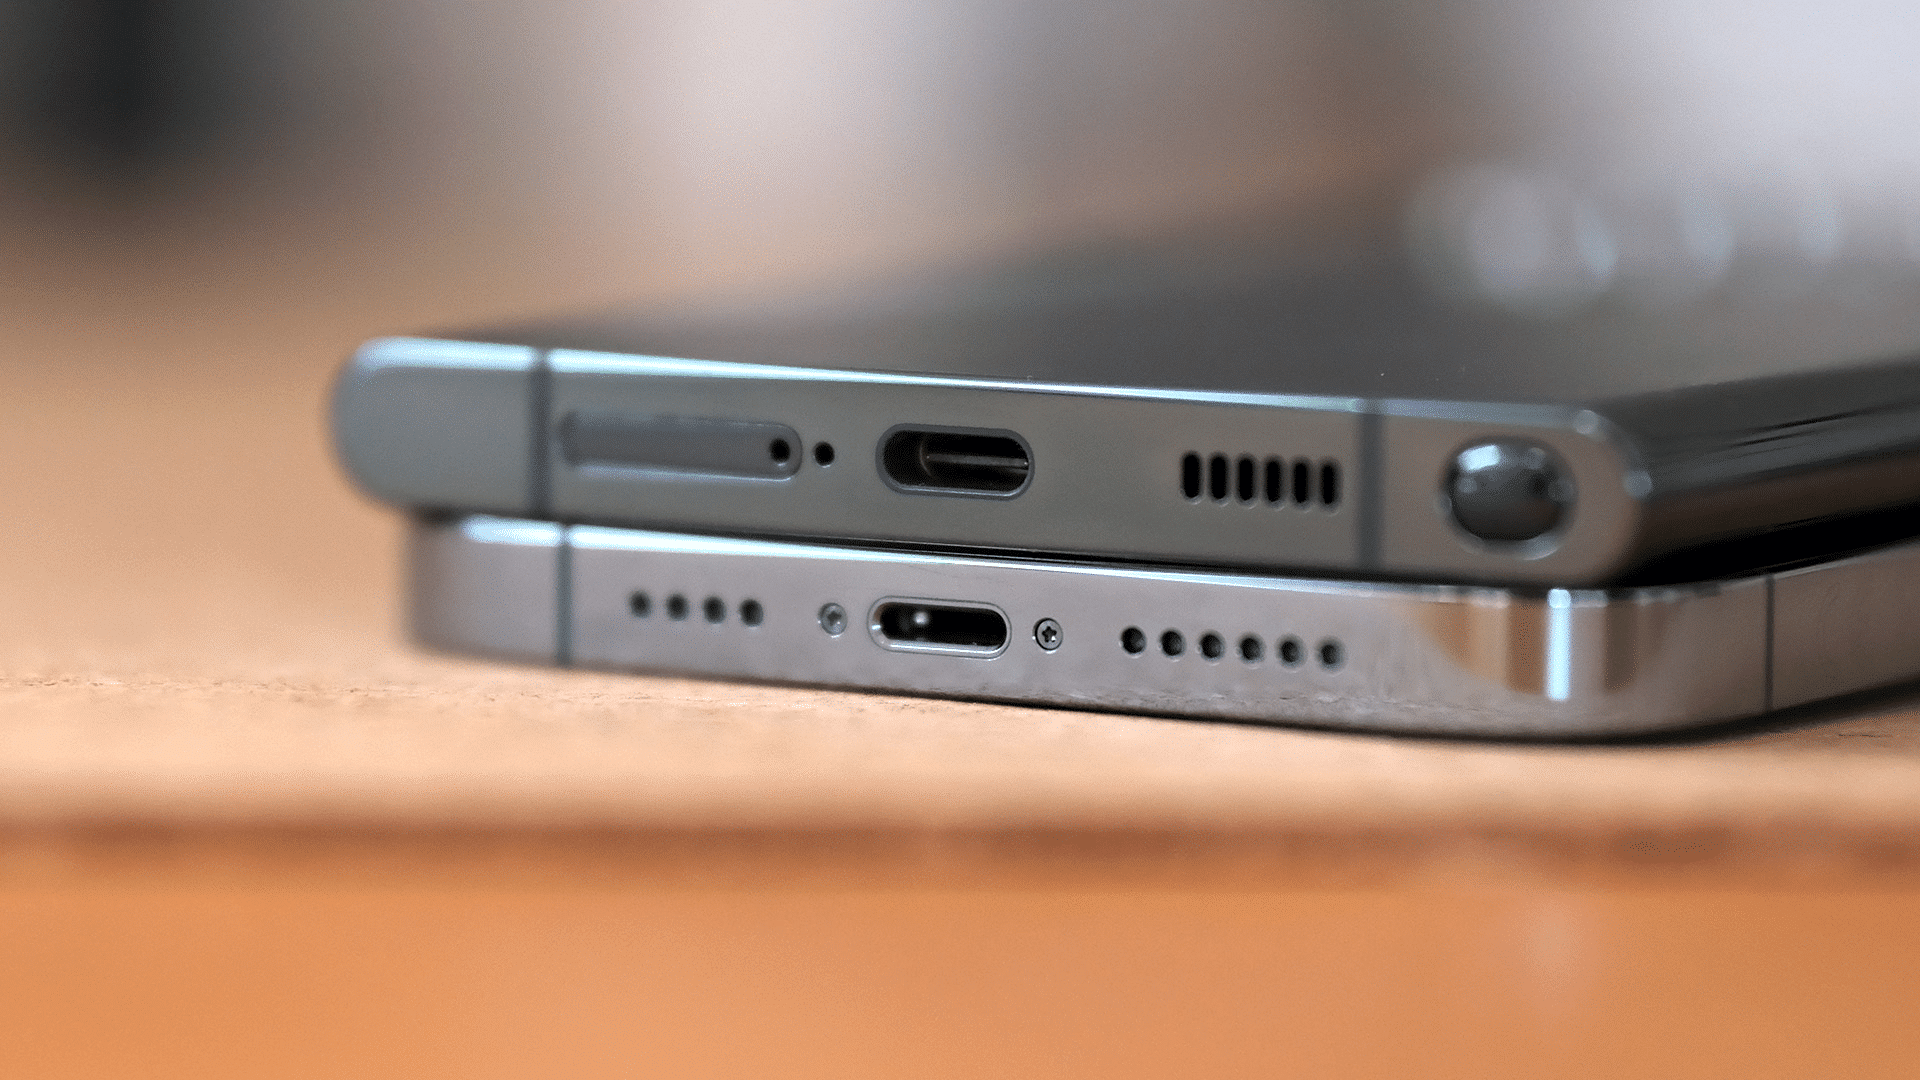 Charging Speed: USB-C port vs. Lightning port